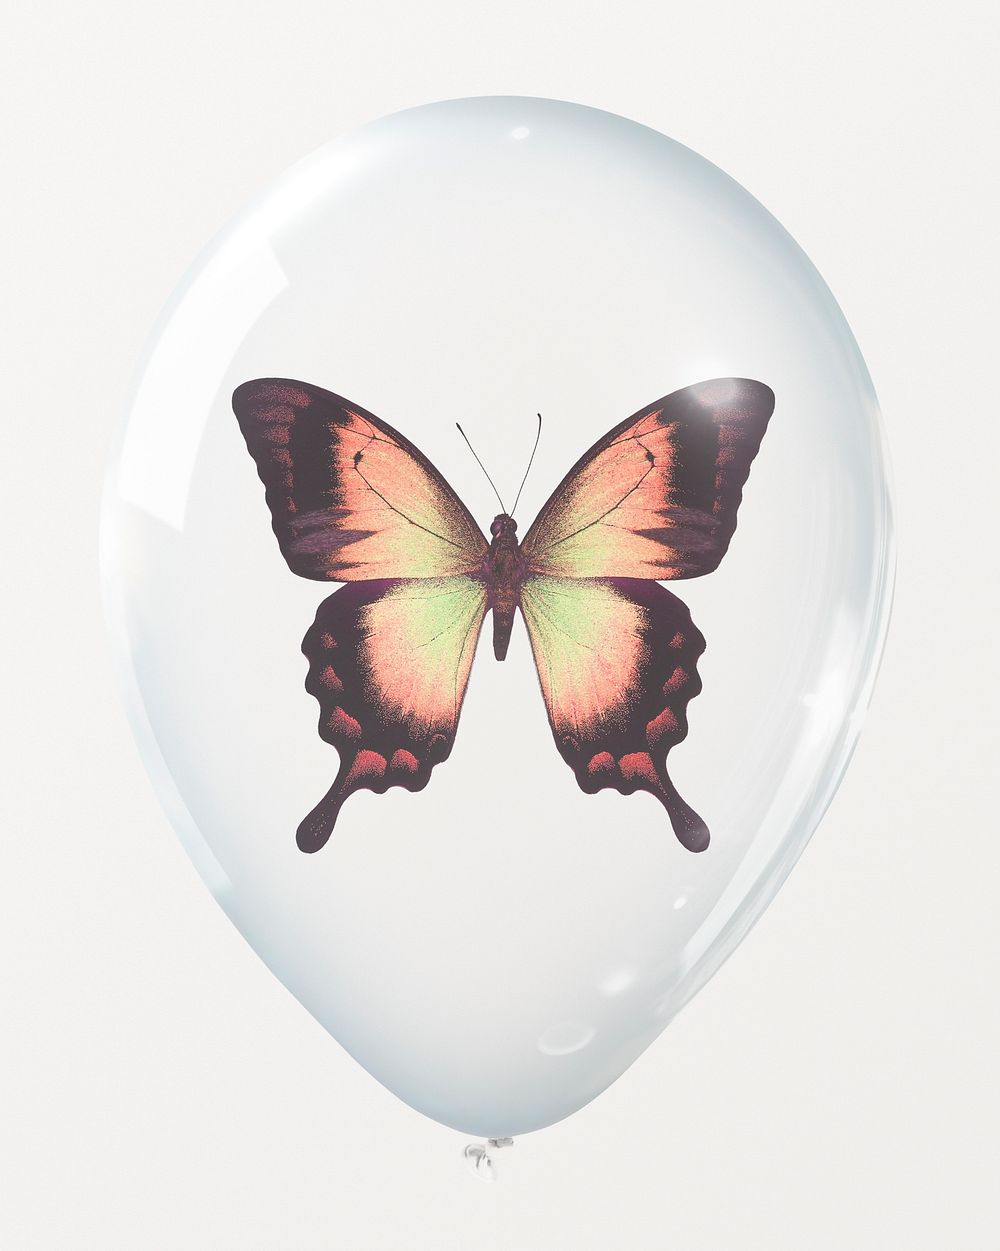 Swallowtail butterfly in clear balloon